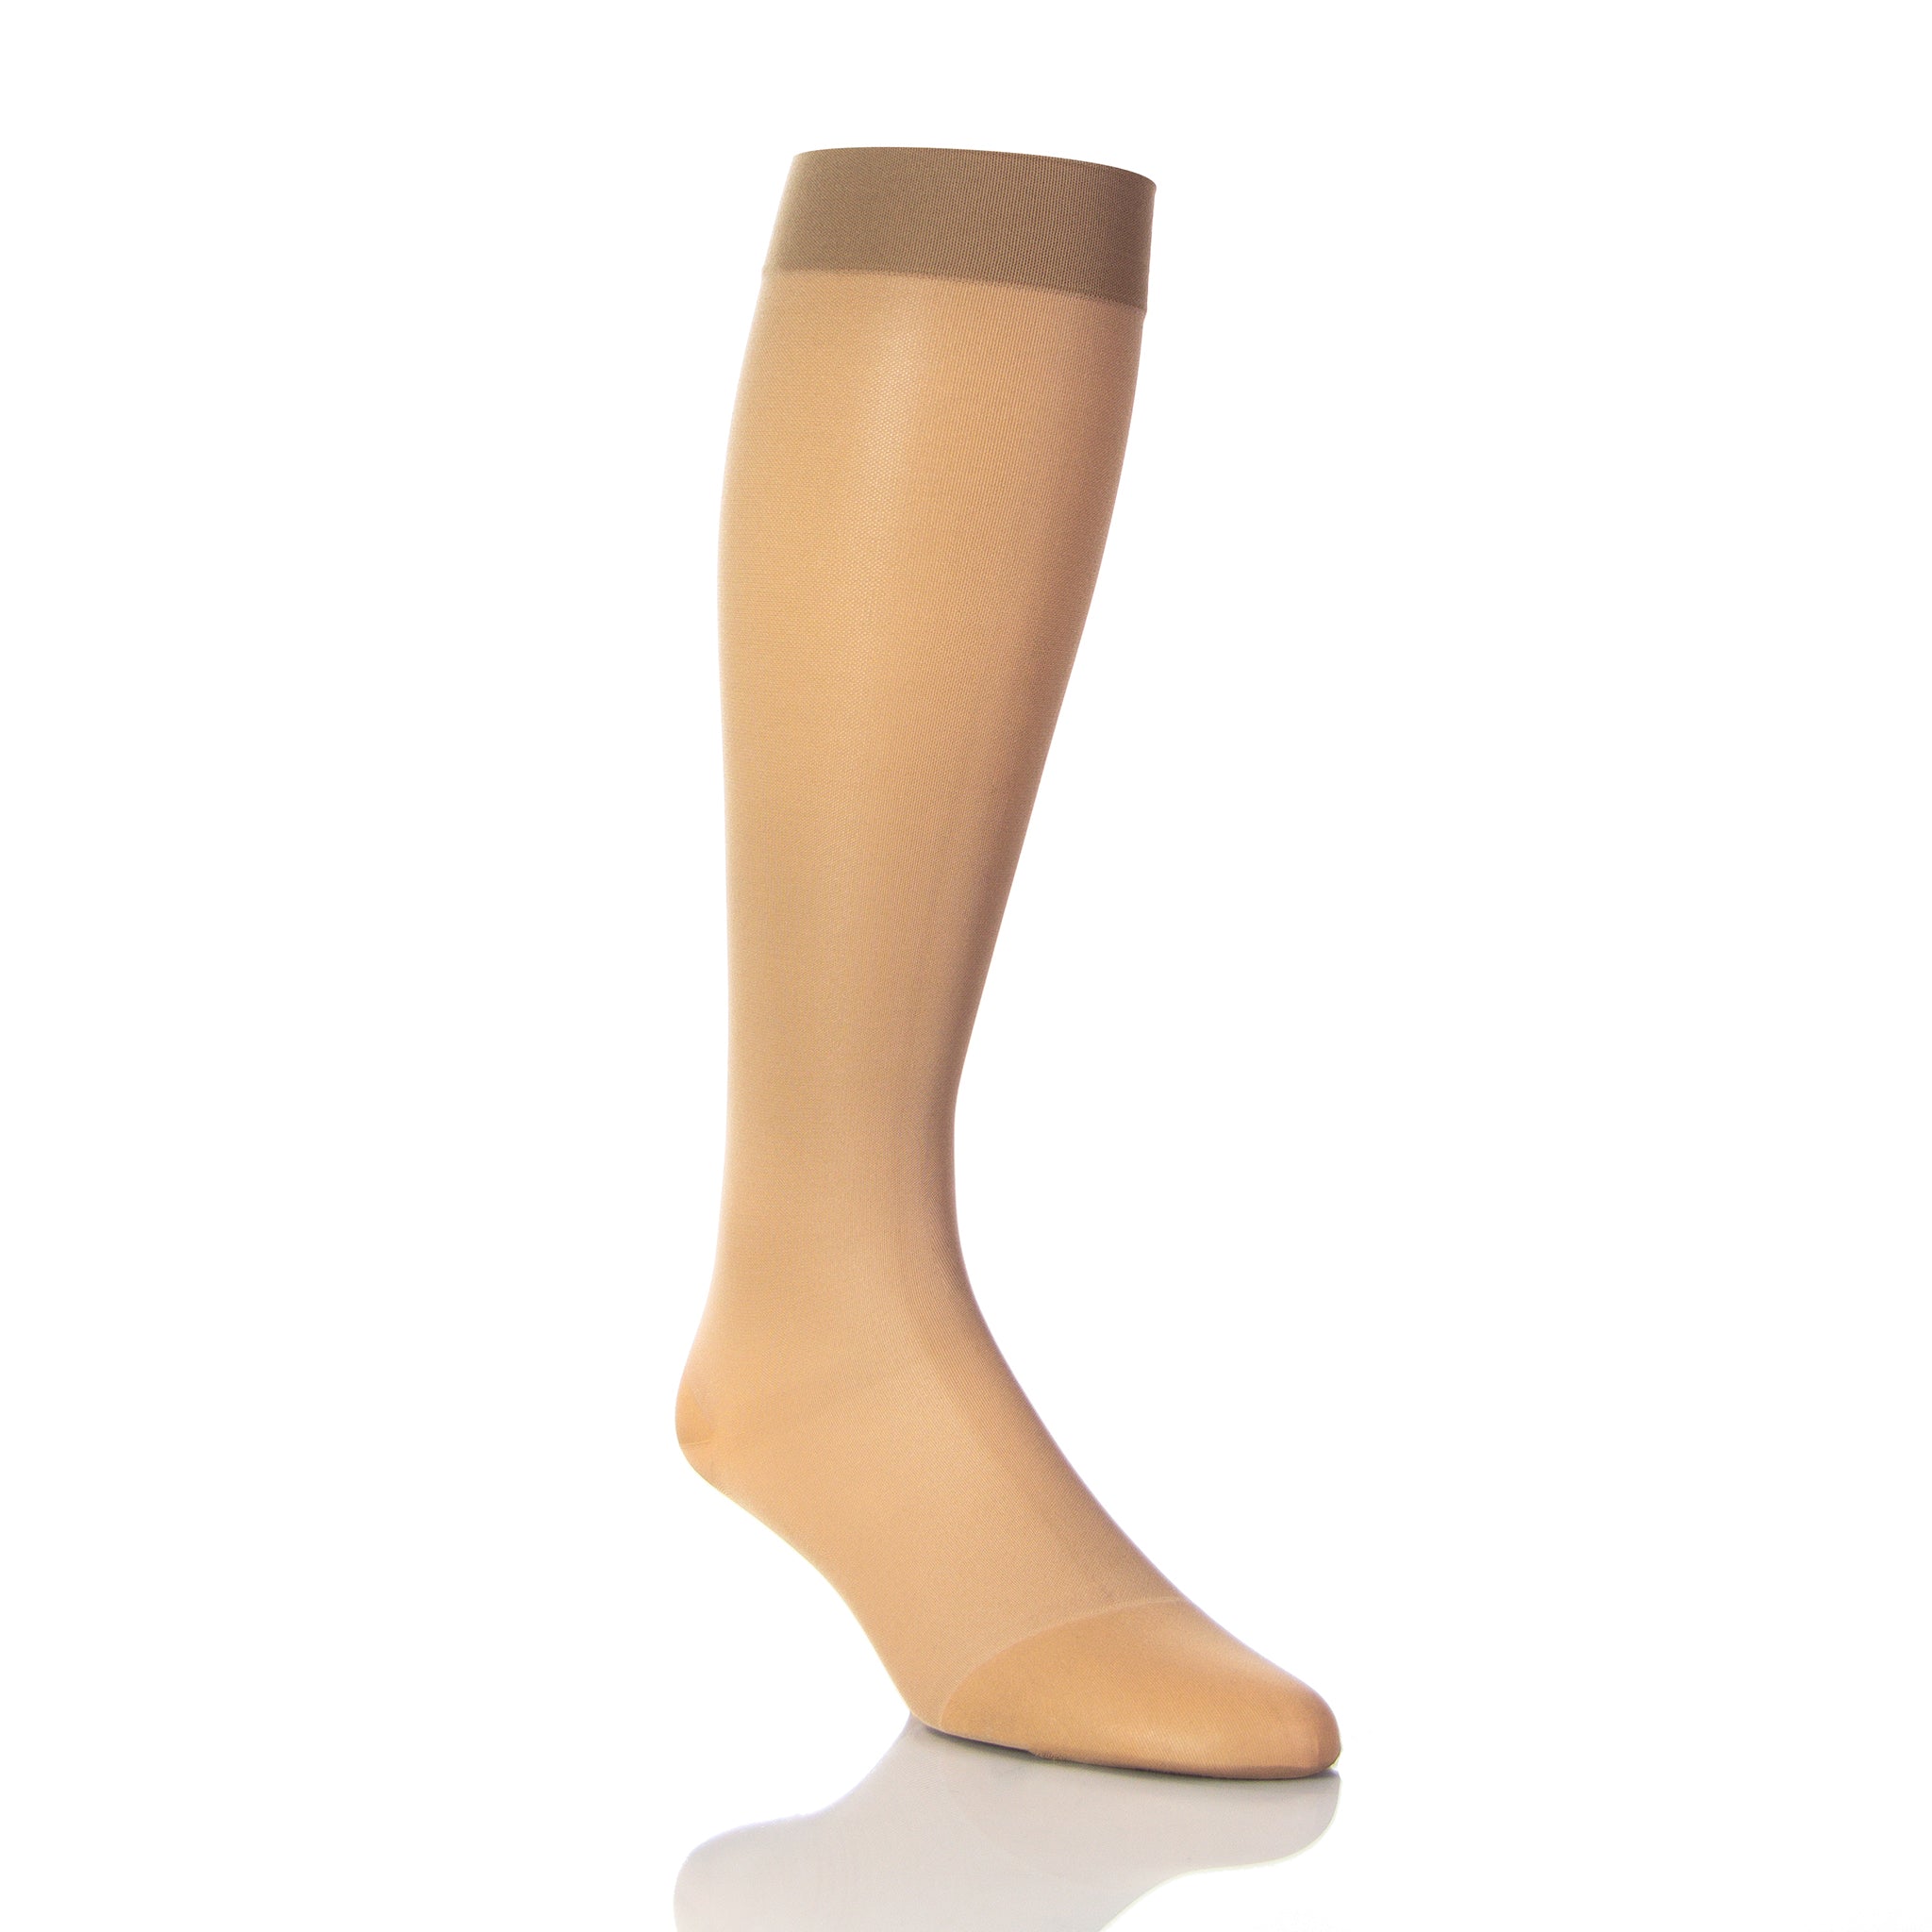 Compression Socks For Men In 20 30 mmHg CircuTrend